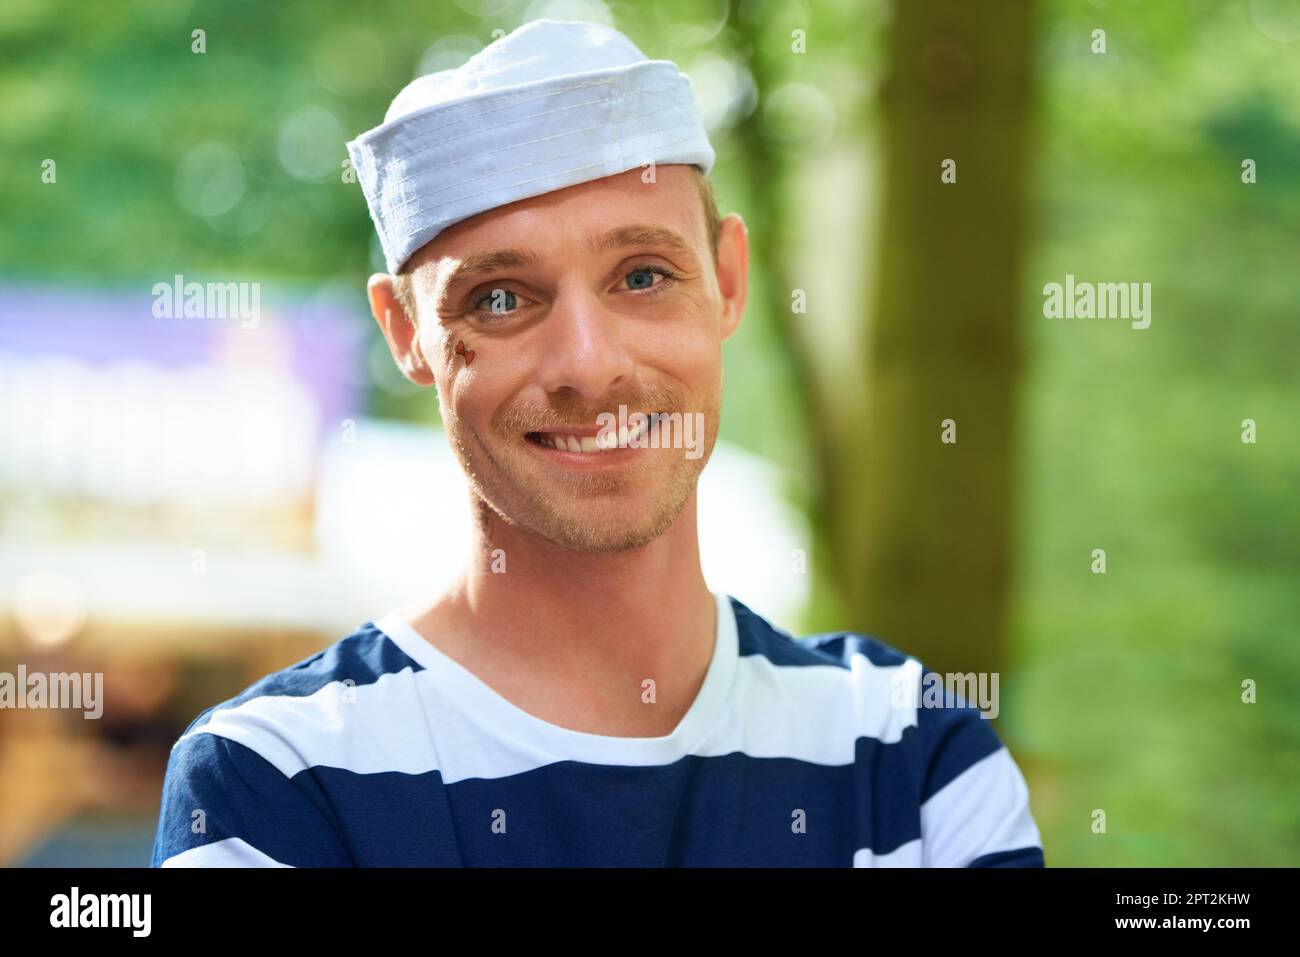 https://c8.alamy.com/comp/2PT2KHW/ahoy-sailor-portrait-of-a-handsome-guy-in-a-sailor-outfit-at-a-music-festival-2PT2KHW.jpg